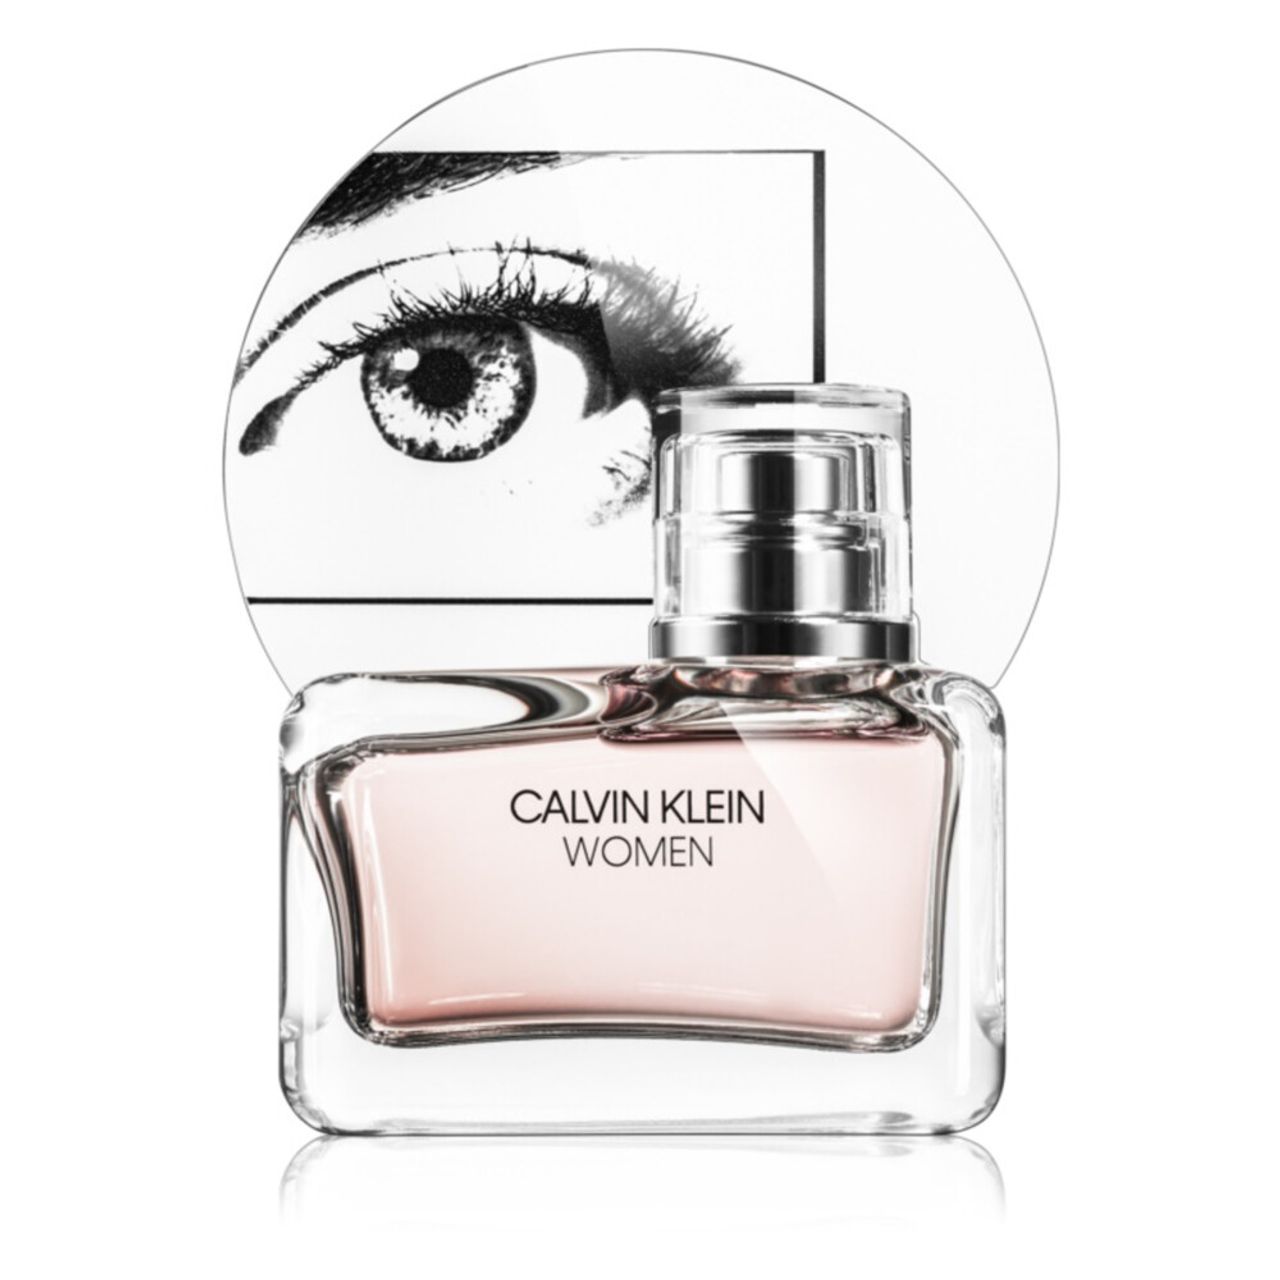 Calvin Klein Women Eau de Parfum Spray 50 ml